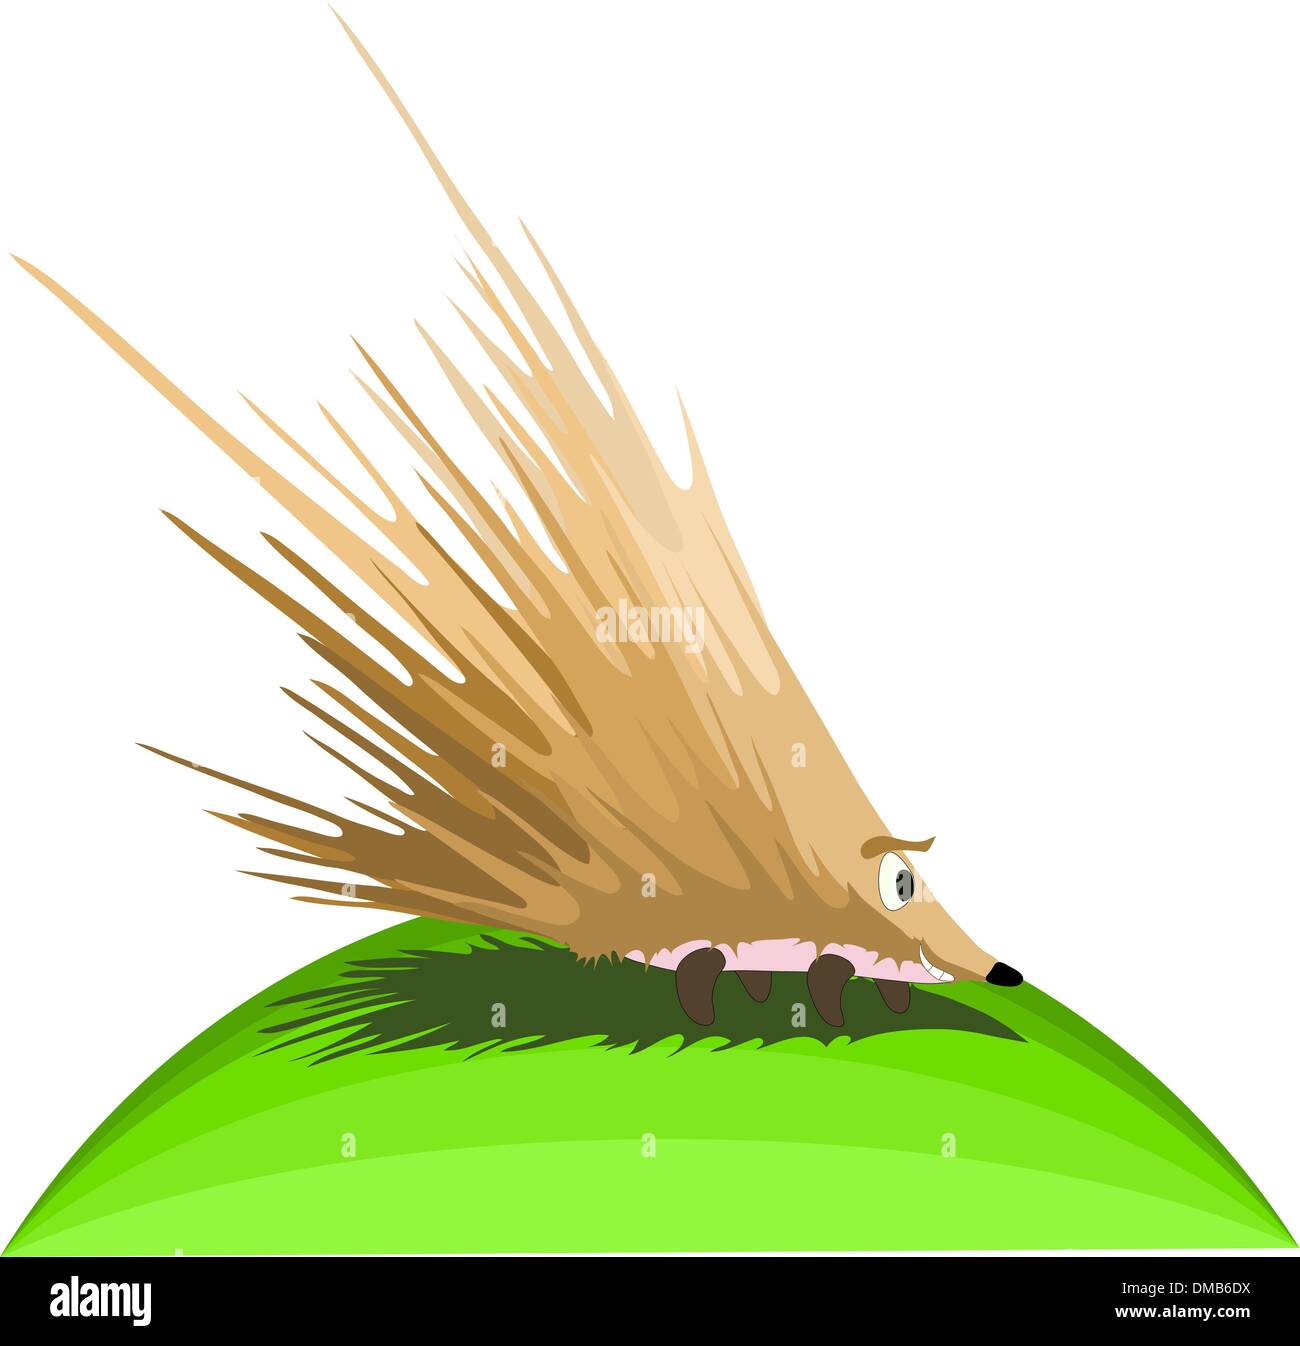 Very prickly hedgehog, illustration Stock Vector